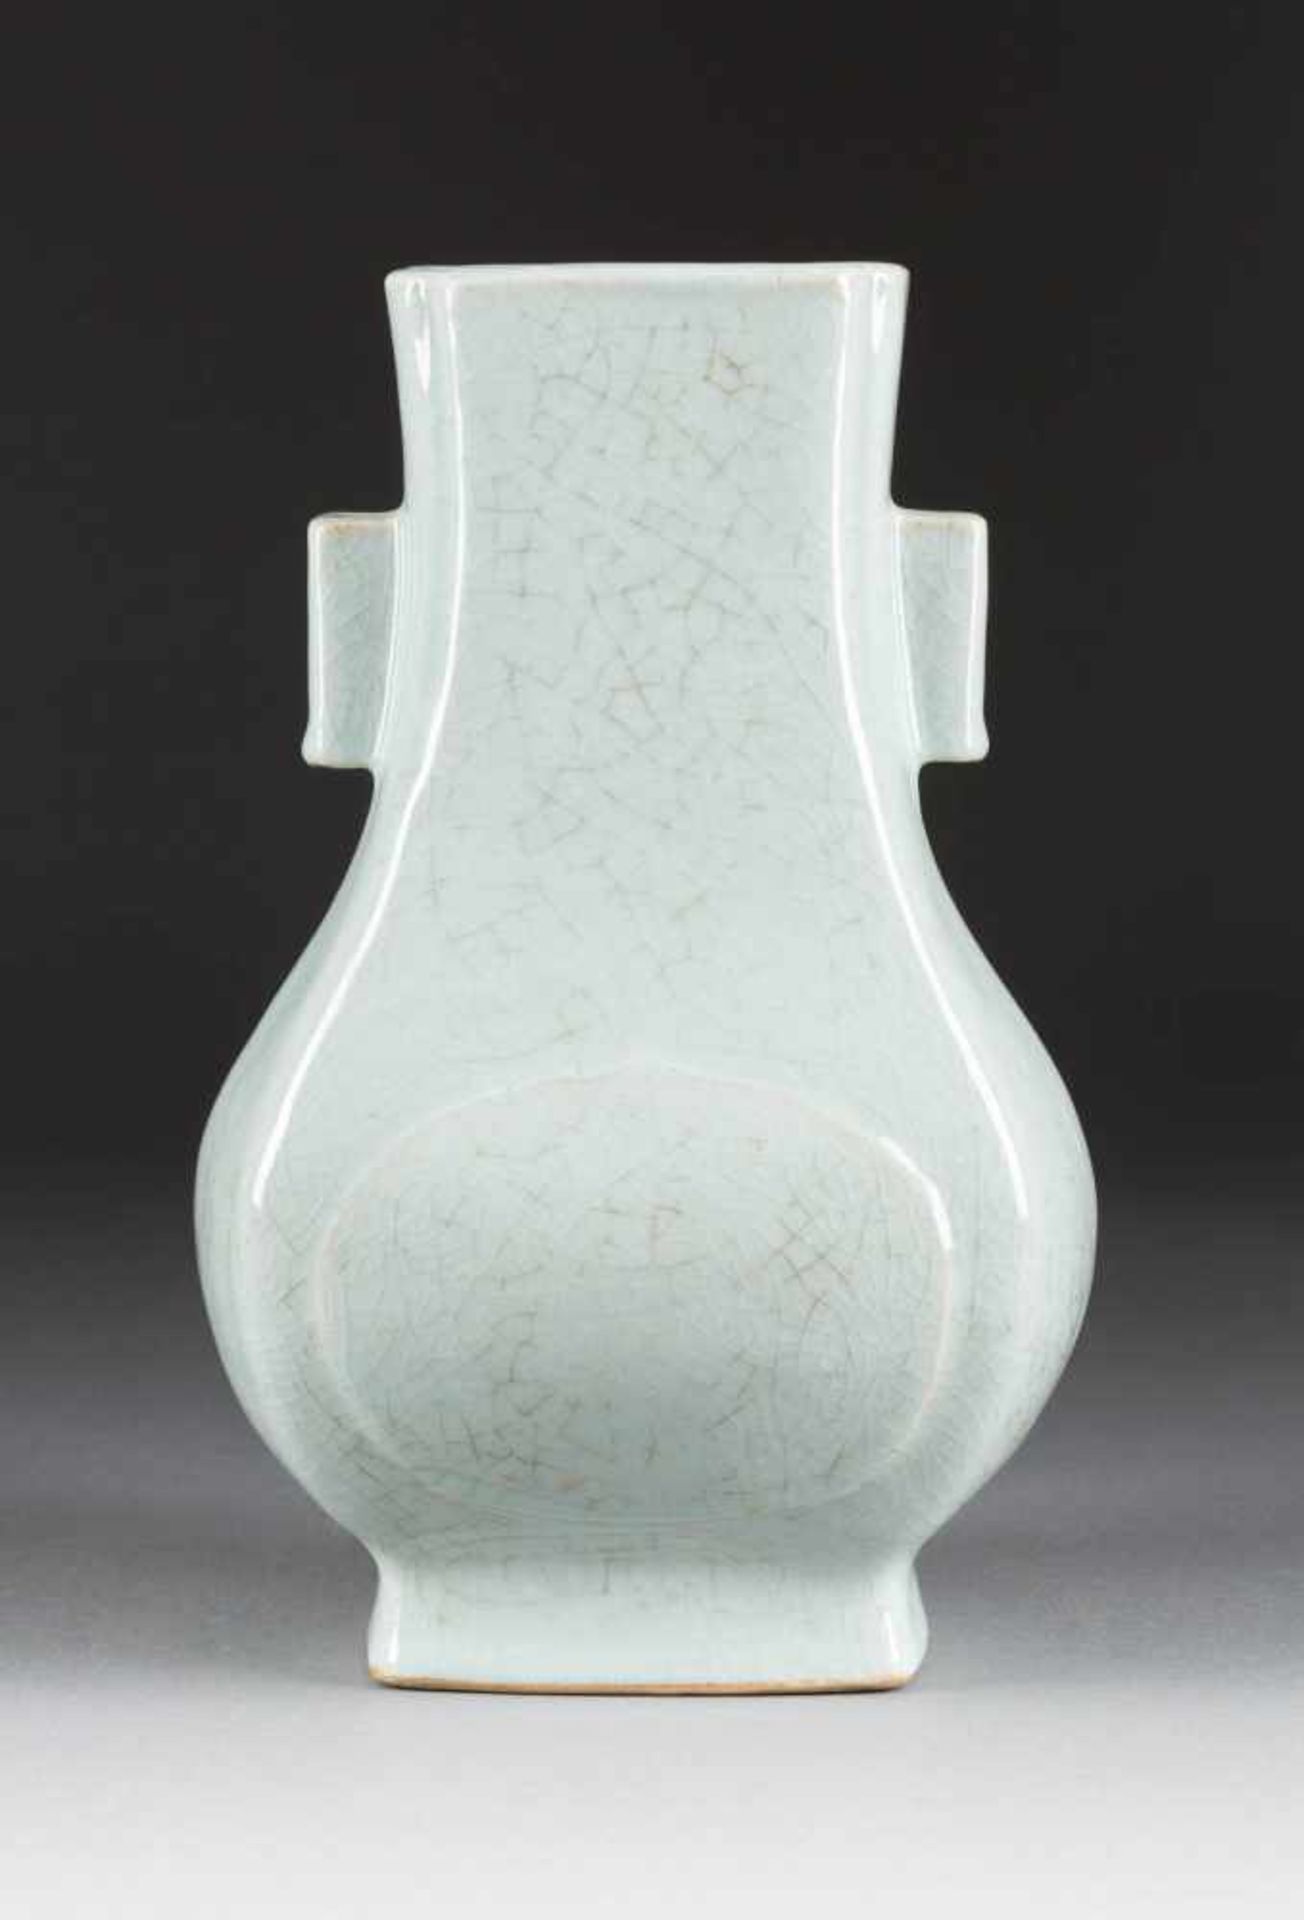 VASE IN 'HU'-FORM China, 20. Jh. Keramik, Ge-Glasur. H. 32 cm. Im Boden Sechs-Zeichen-Marke 'Da-Qing